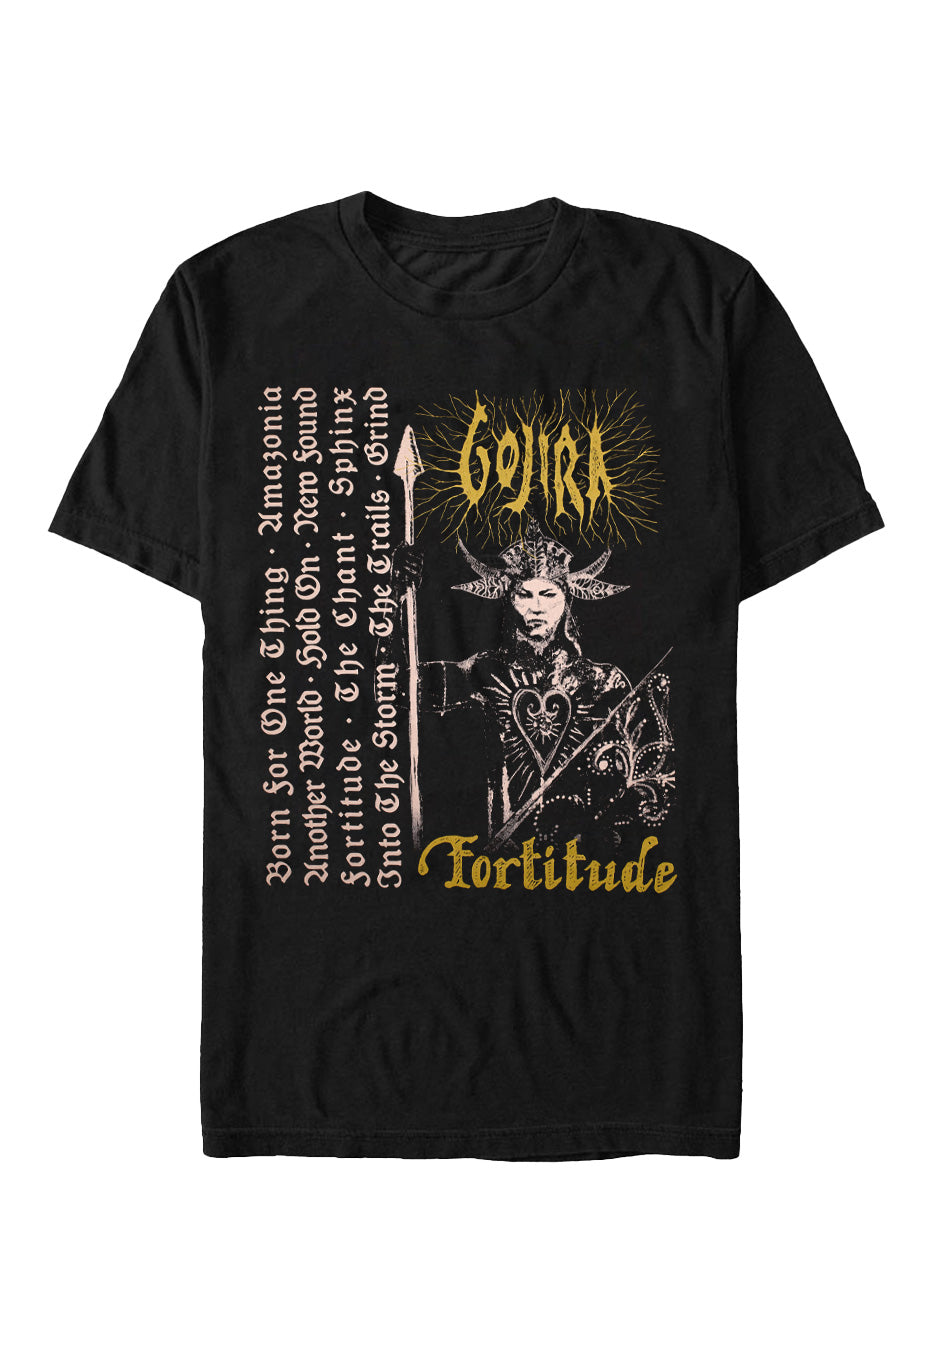 Gojira - Fortitude Tracklist - T-Shirt